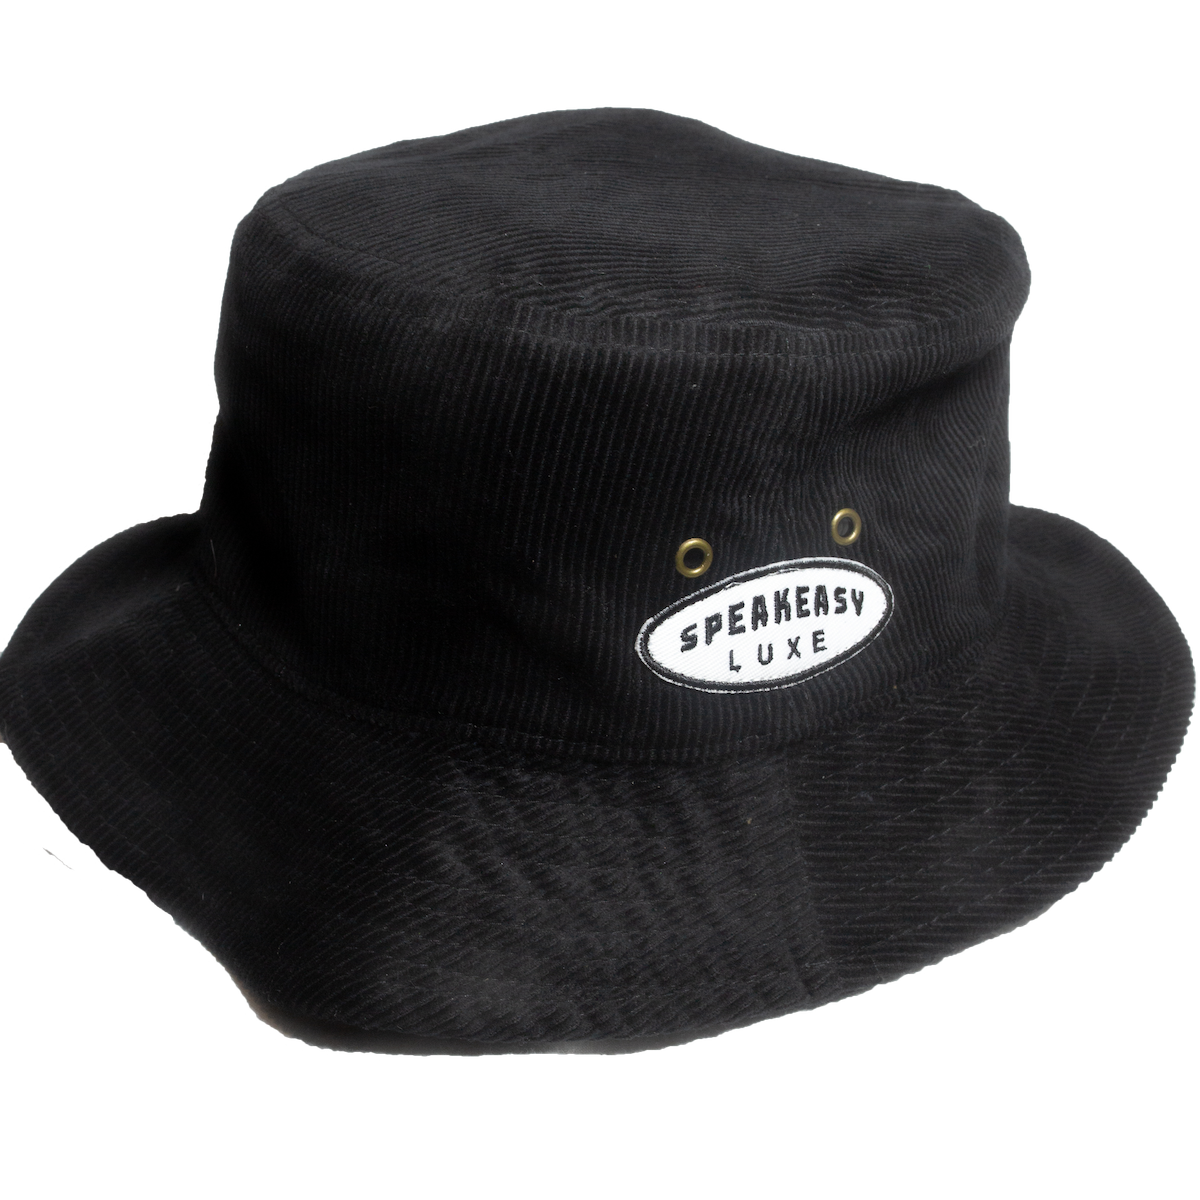 Corduroy Bucket Hat - Black w/ Handsewn Patch